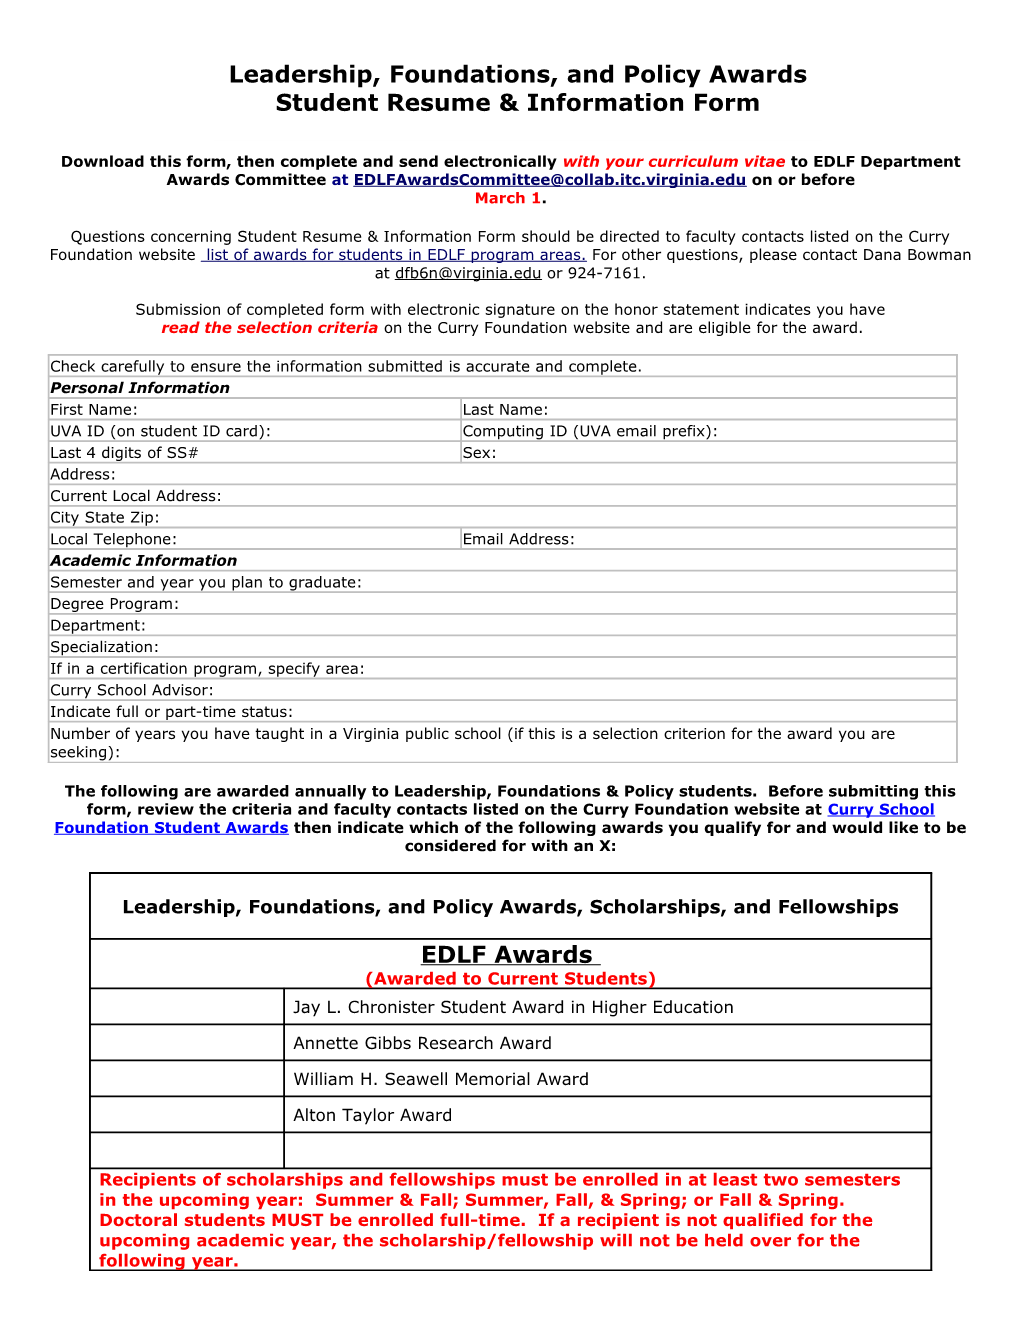 Student Resume & Information Form s1